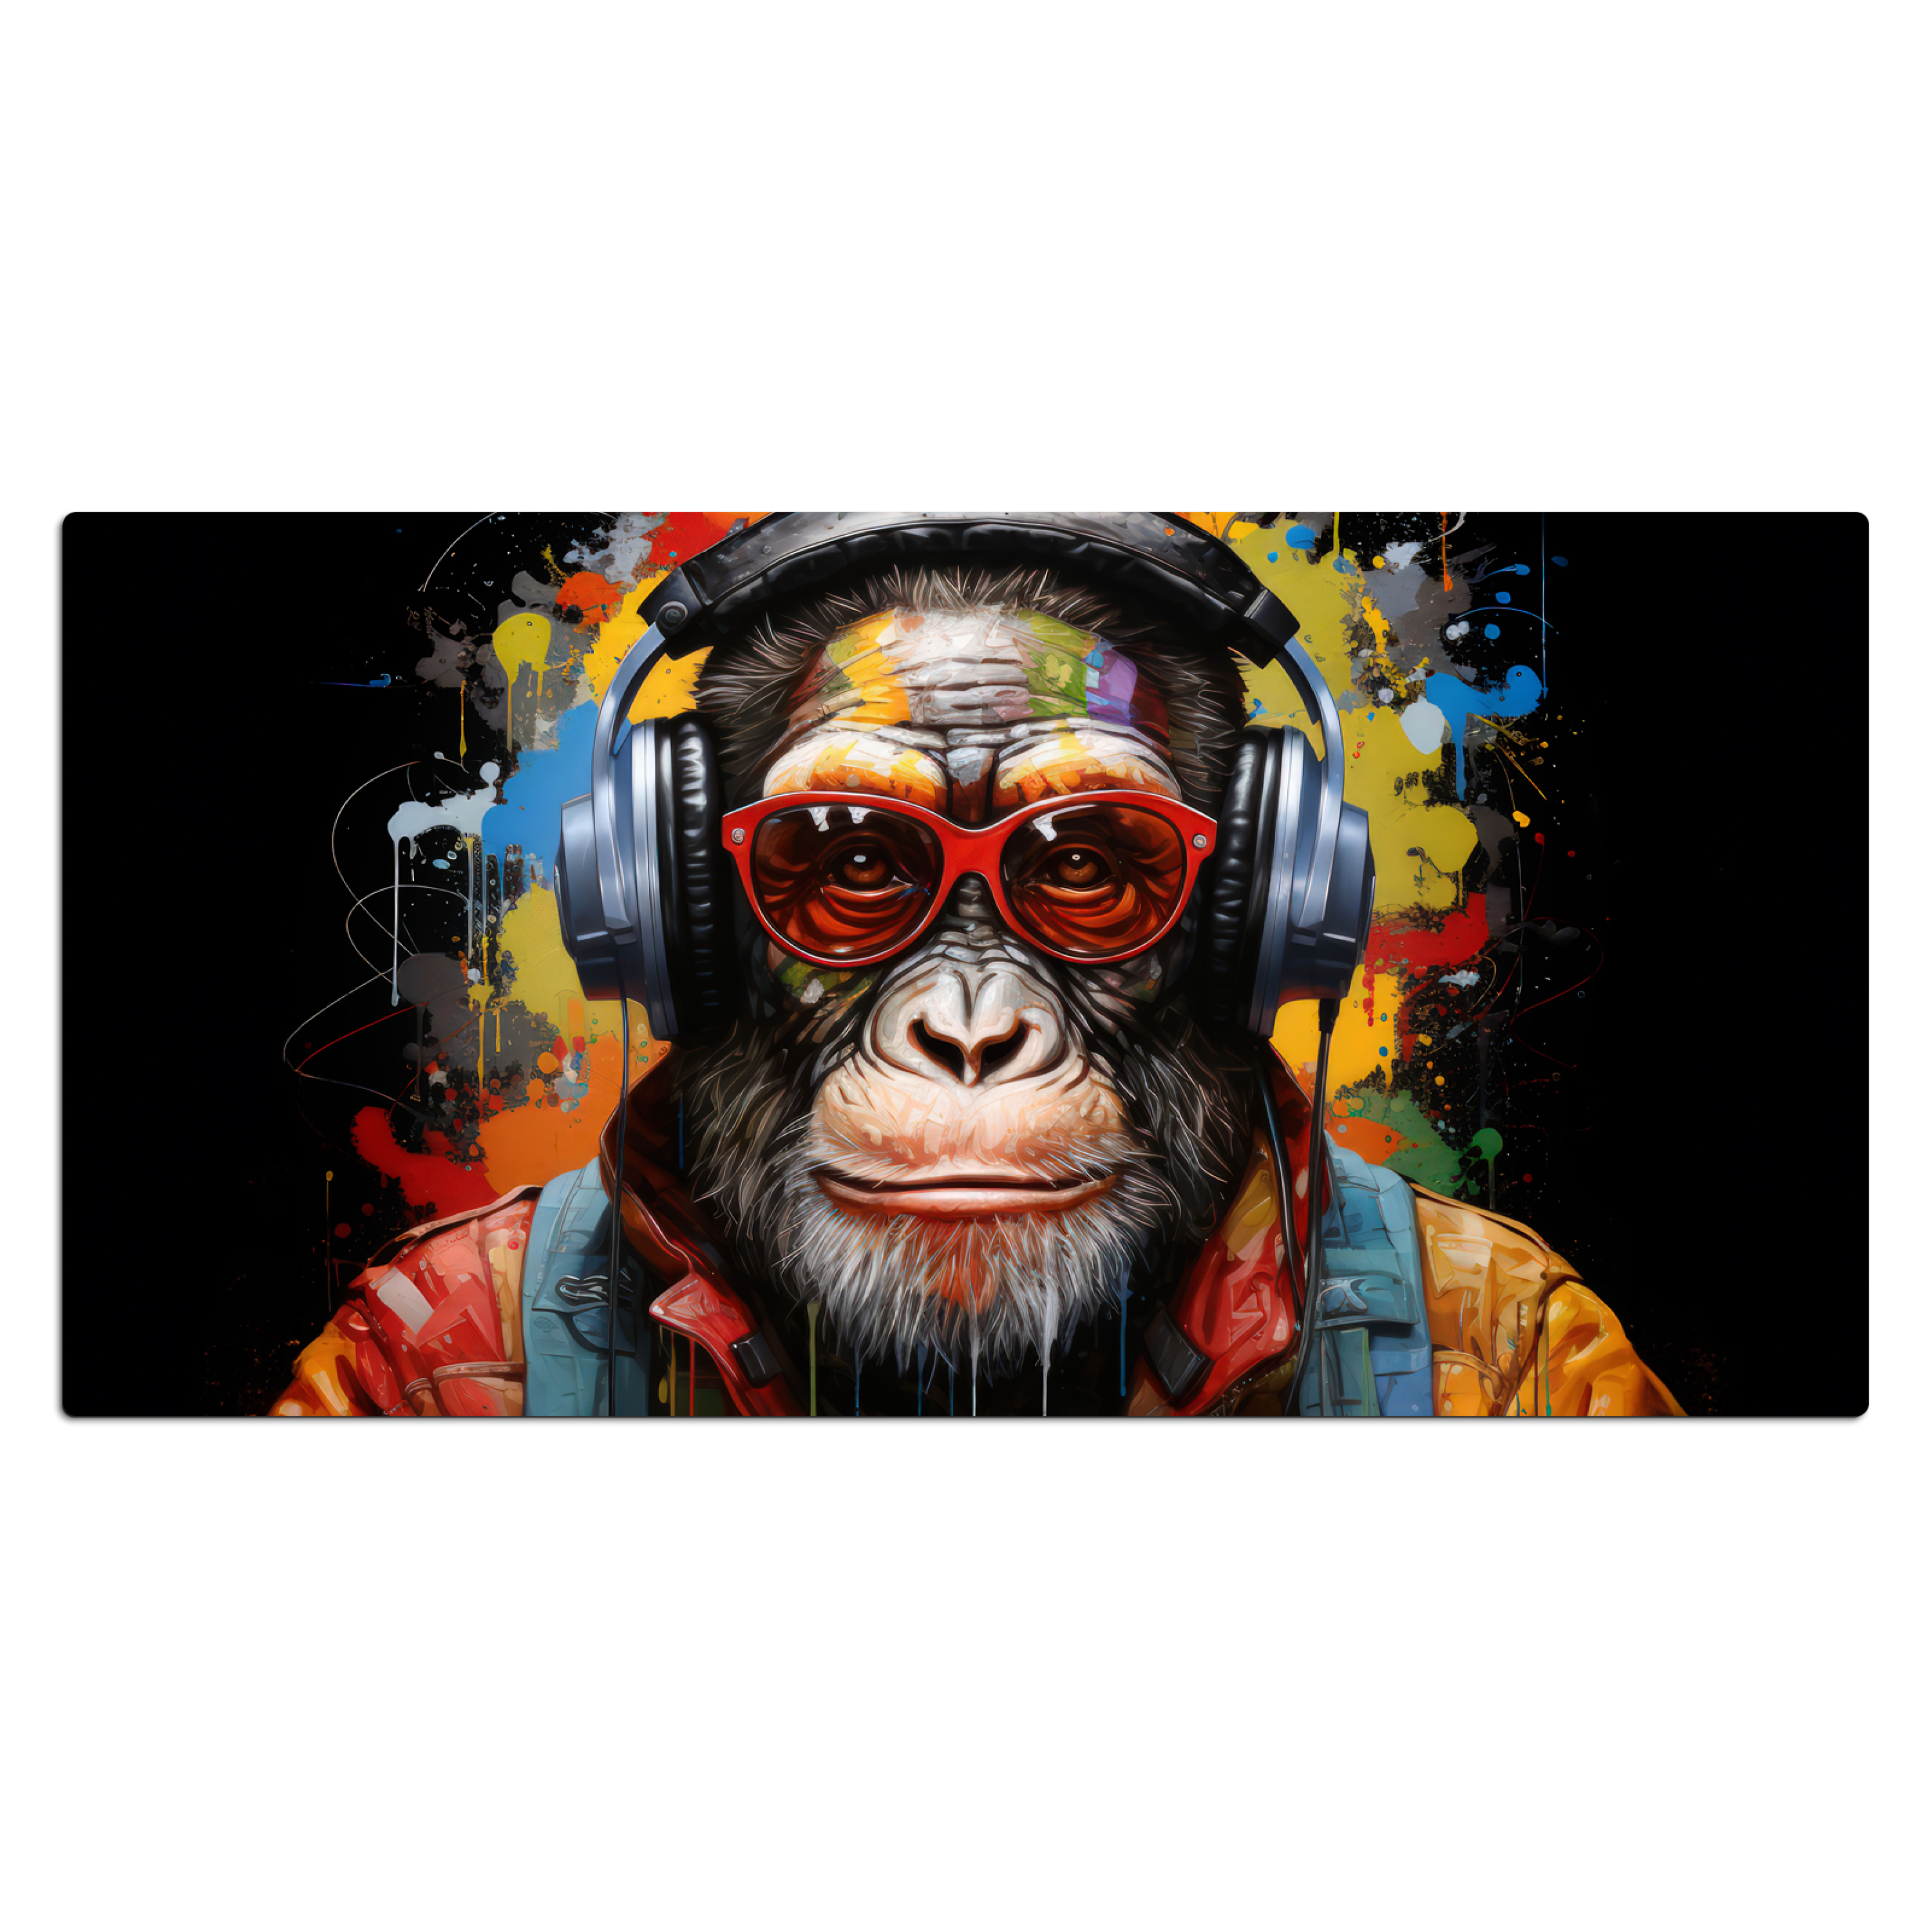 Bureau onderlegger - Chimpansee - Aap - Dieren - Graffiti - Bril - Koptelefoon - Kleuren